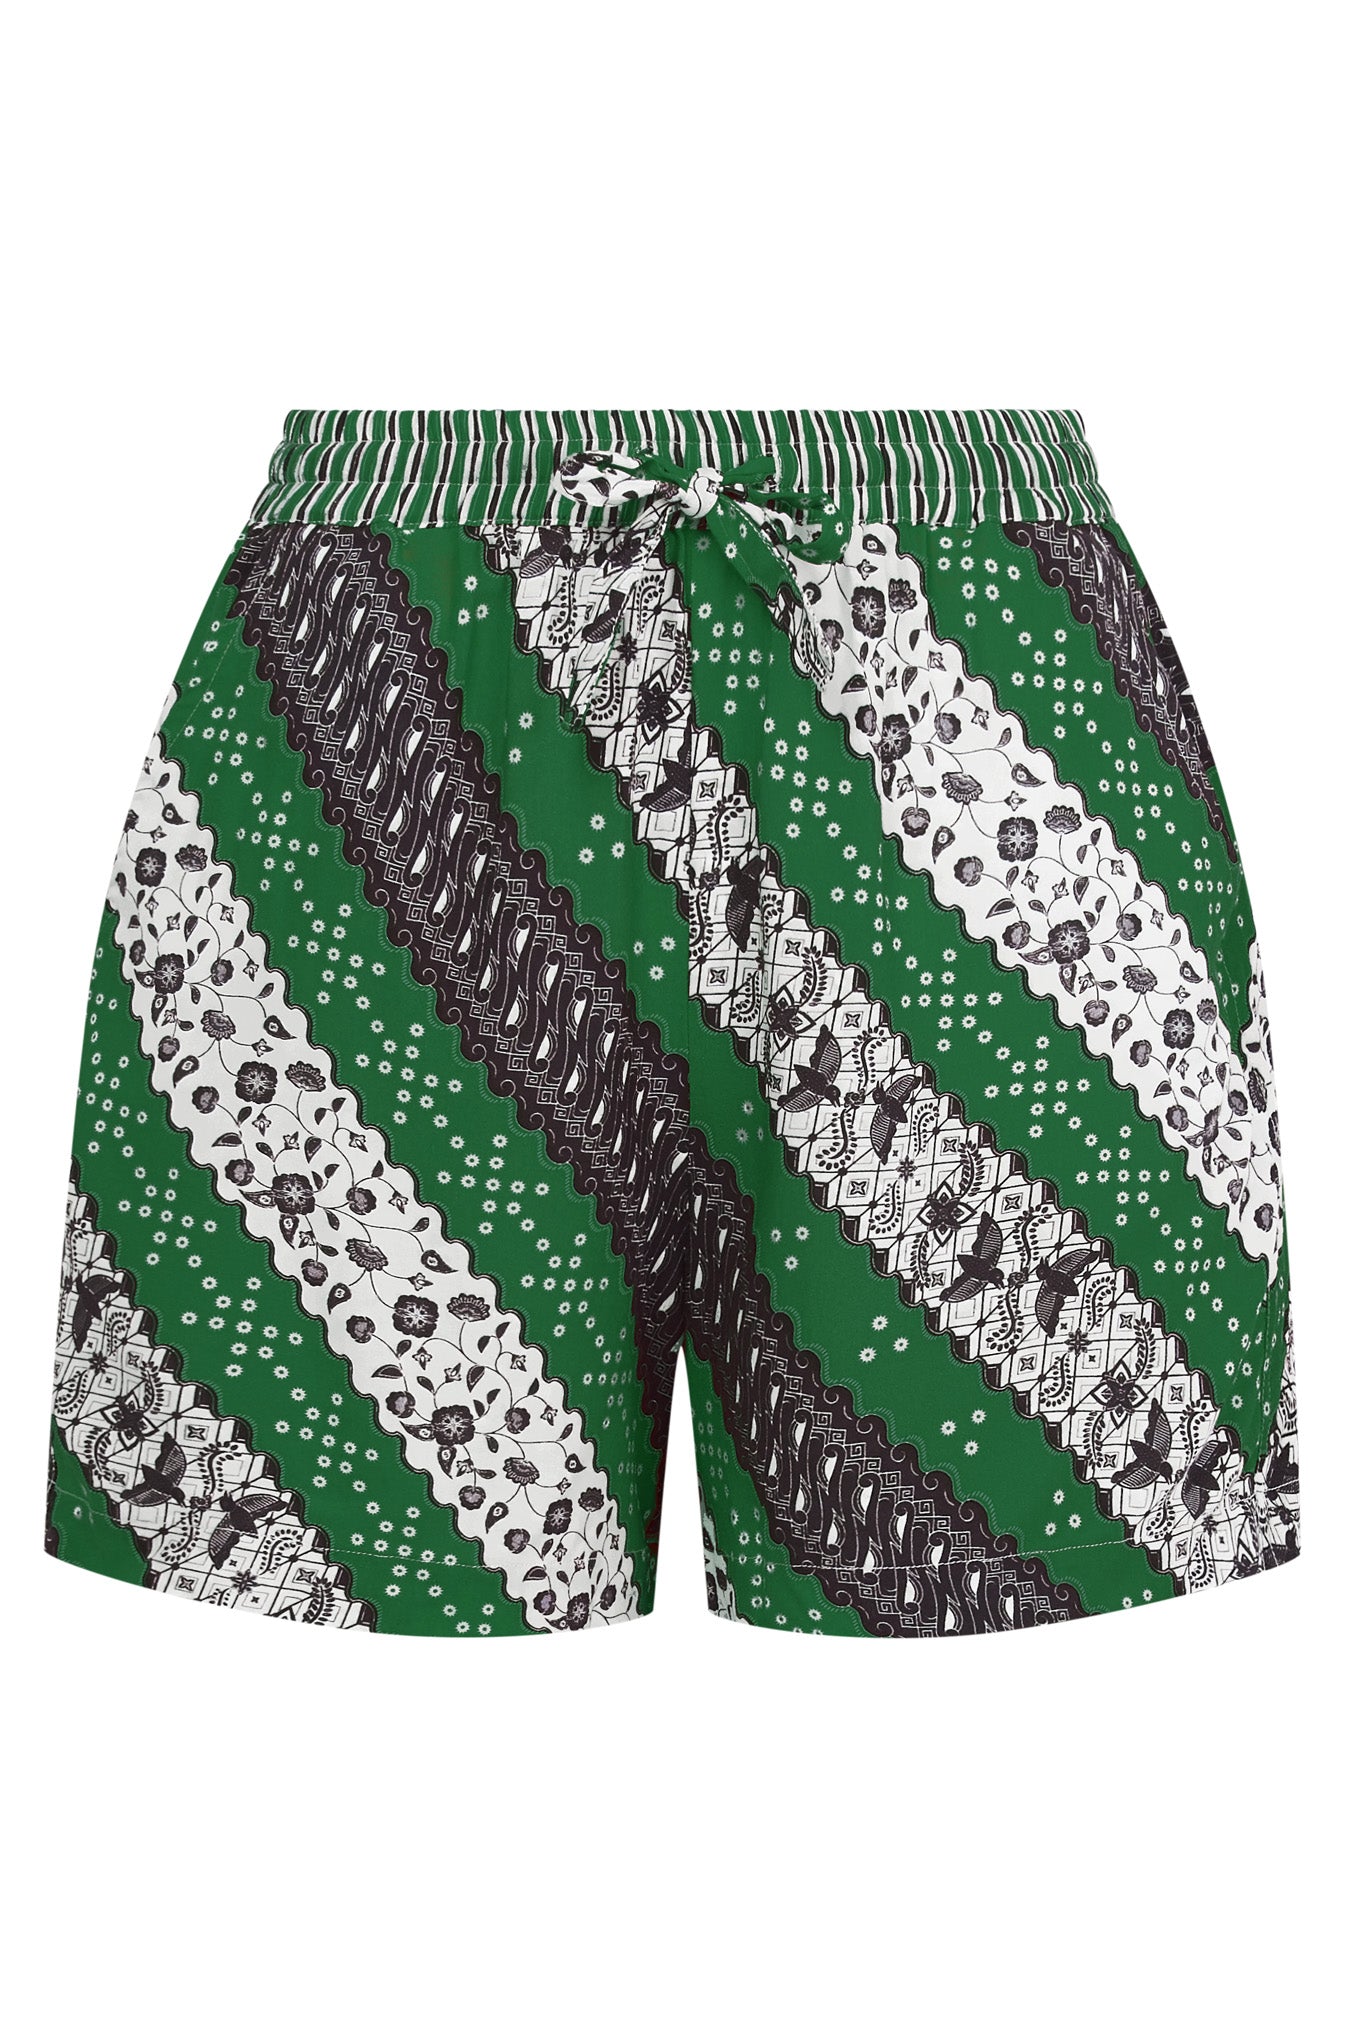 LEAH Shorts - Summer Green, SIZE 4 / UK 14 / EUR 42